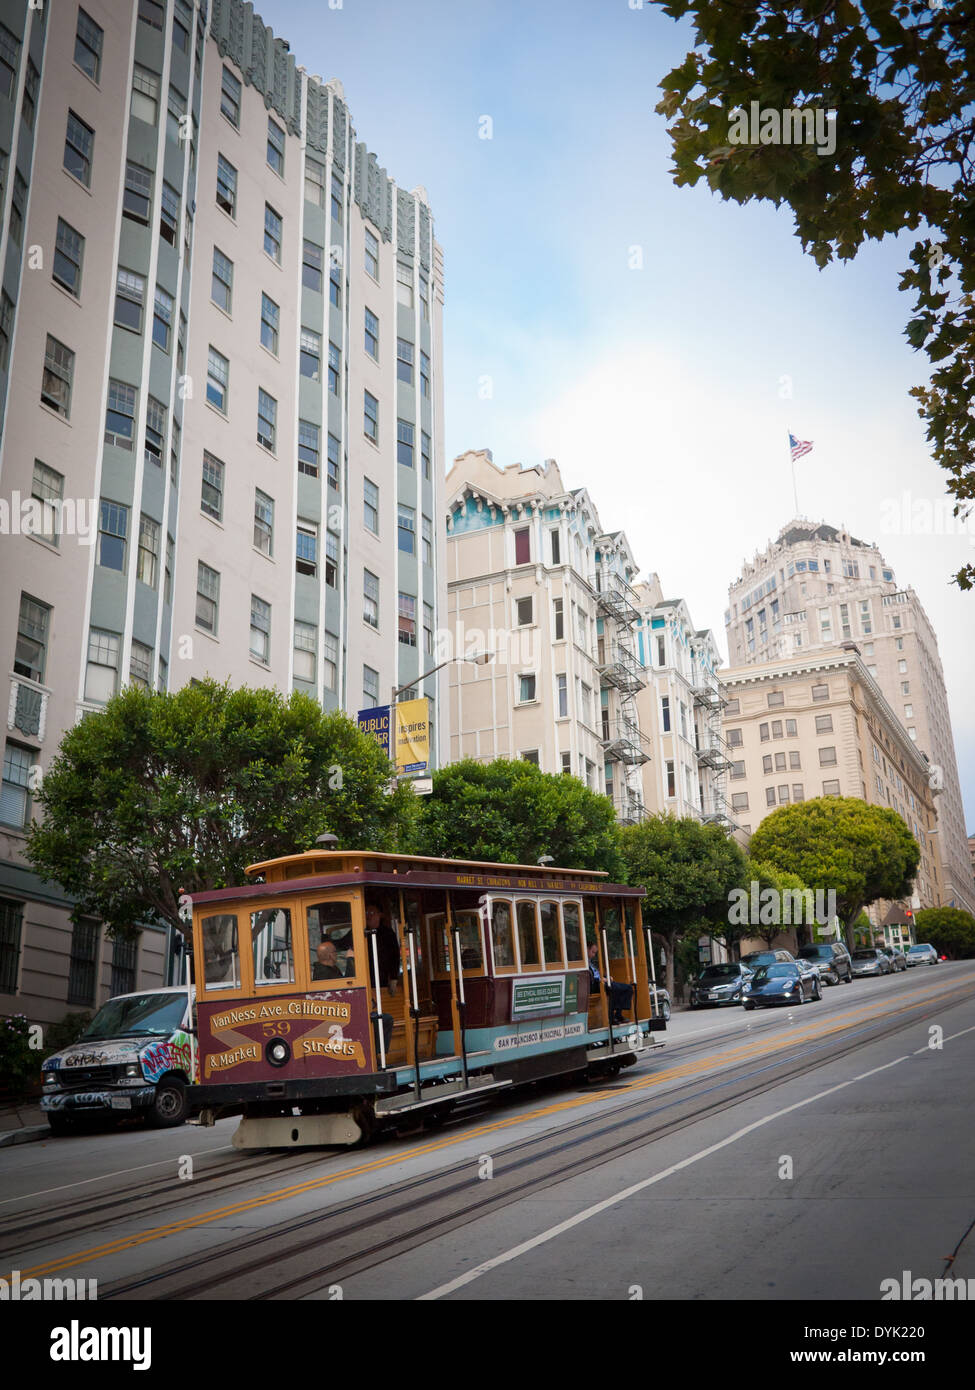 A California Street cable car rumbles down Nob Hill in San Francisco, California. InterContinental Mark Hopkins Hotel at right. Stock Photo